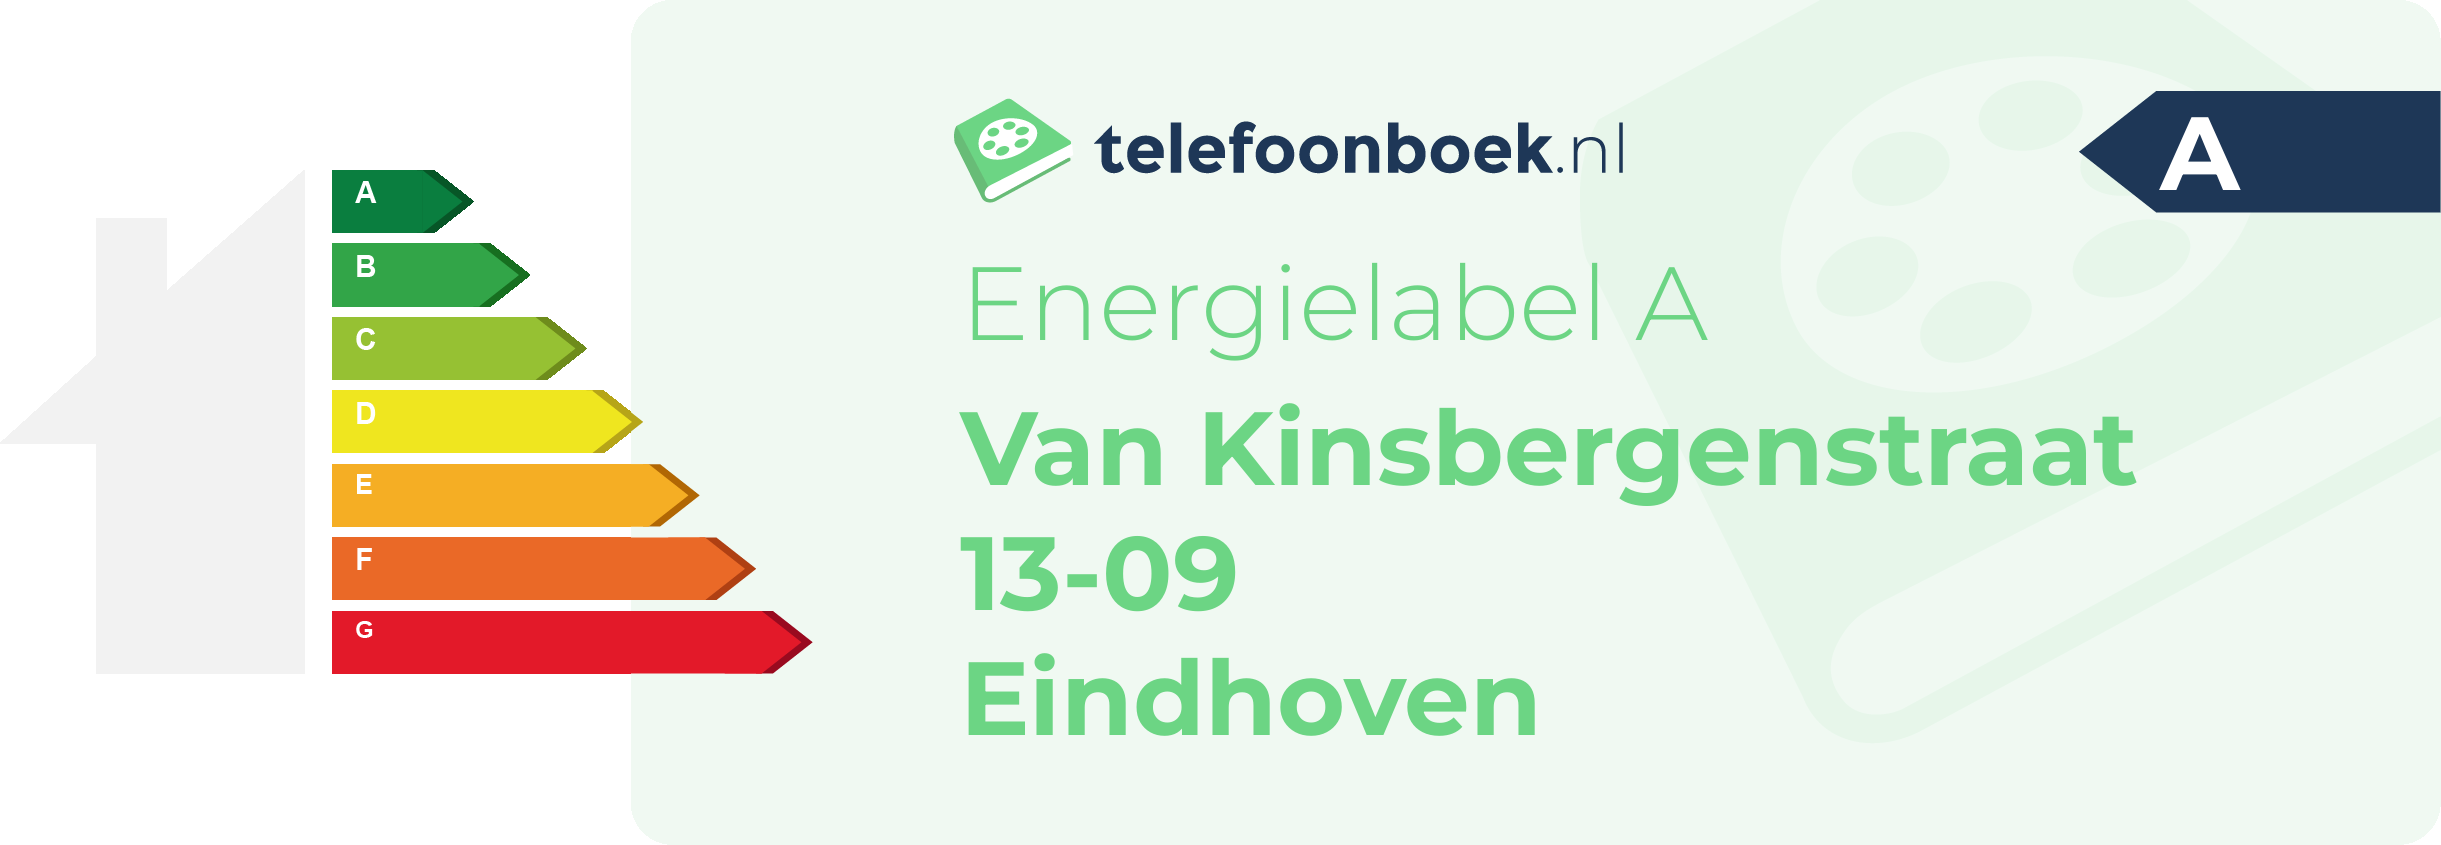 Energielabel Van Kinsbergenstraat 13-09 Eindhoven